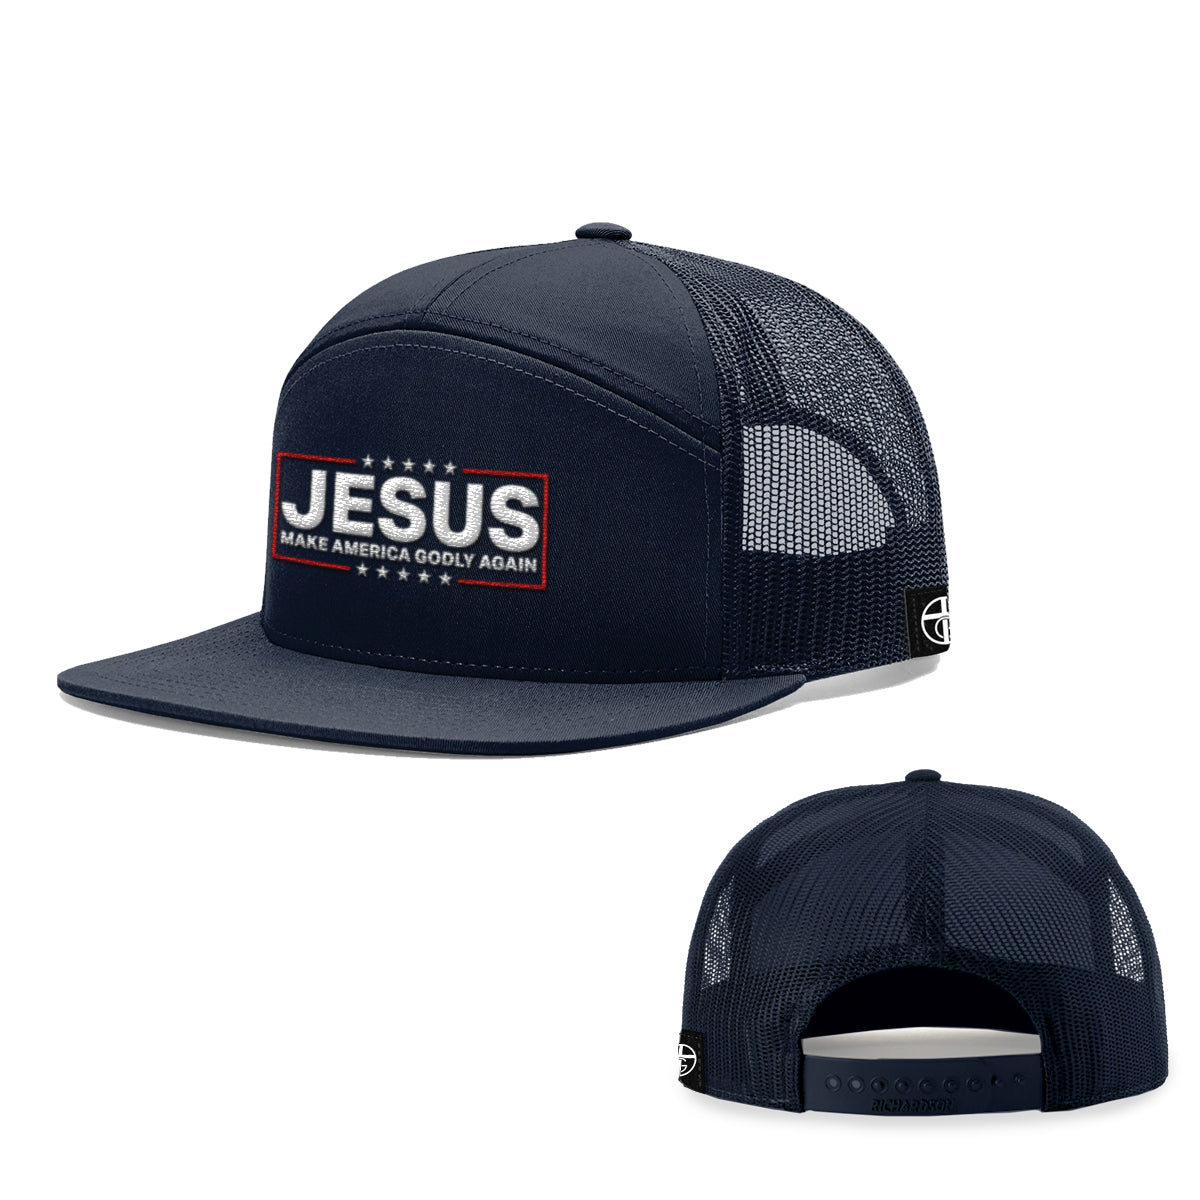 Jesus Make America Godly Again 7 Panel Hats